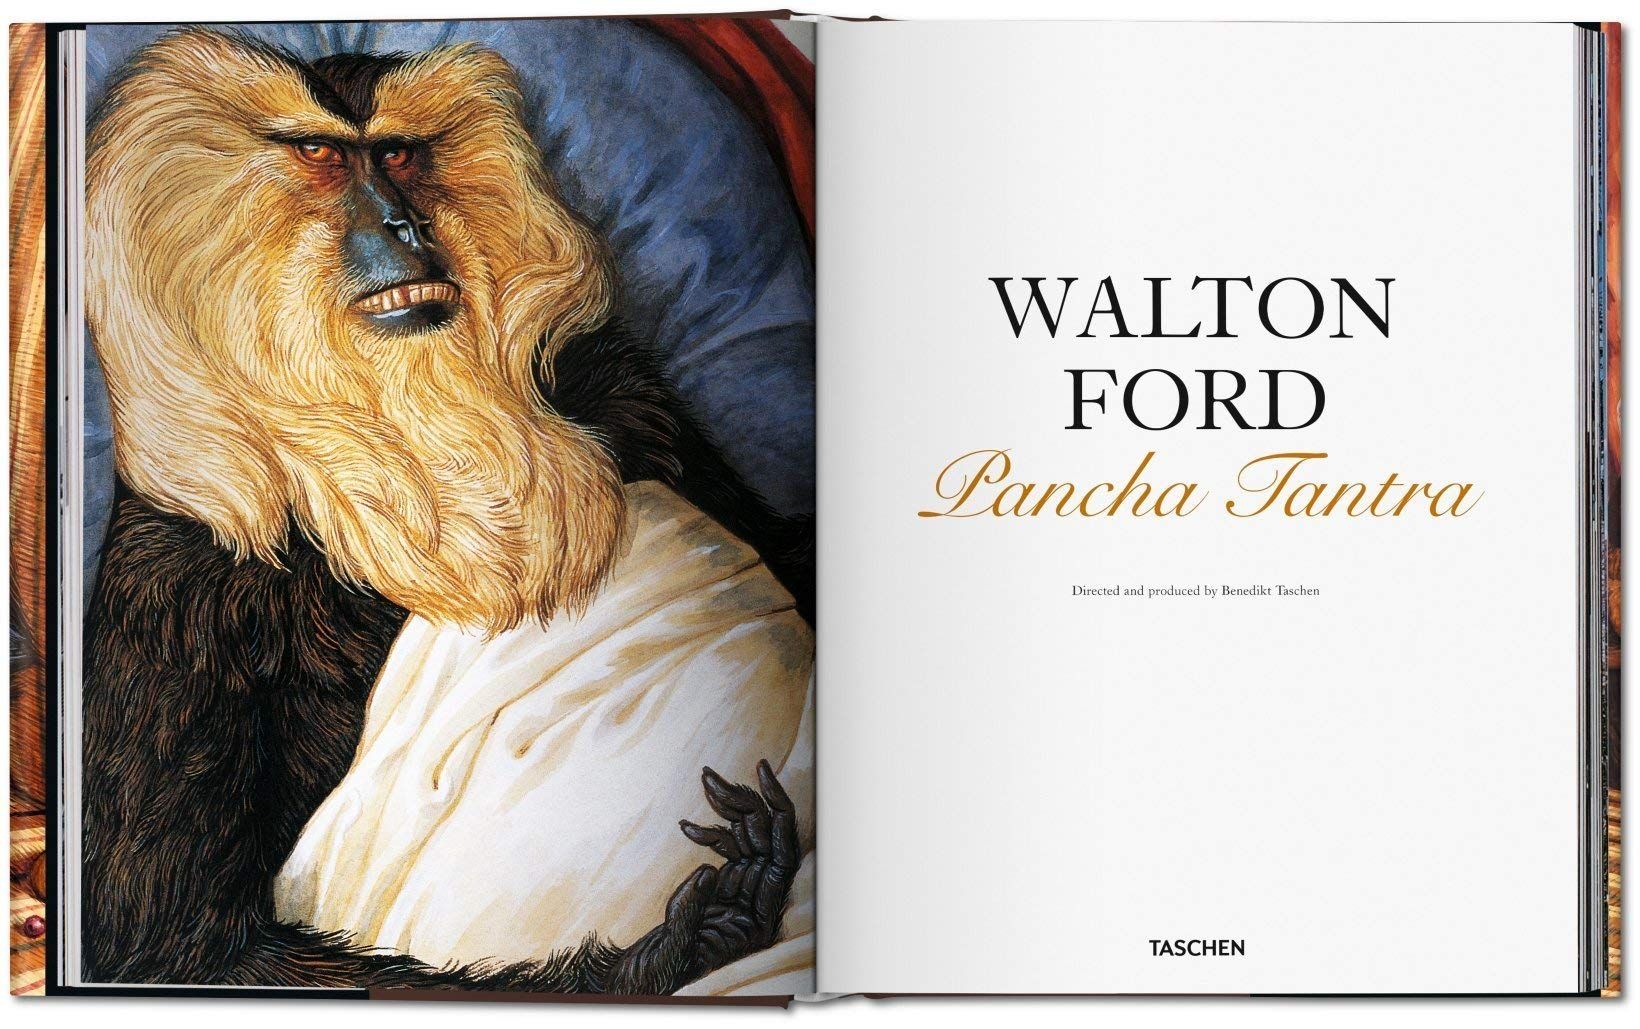  Walton Ford: Pancha Tantra - Bill Buford - 9783836559089 - Taschen 